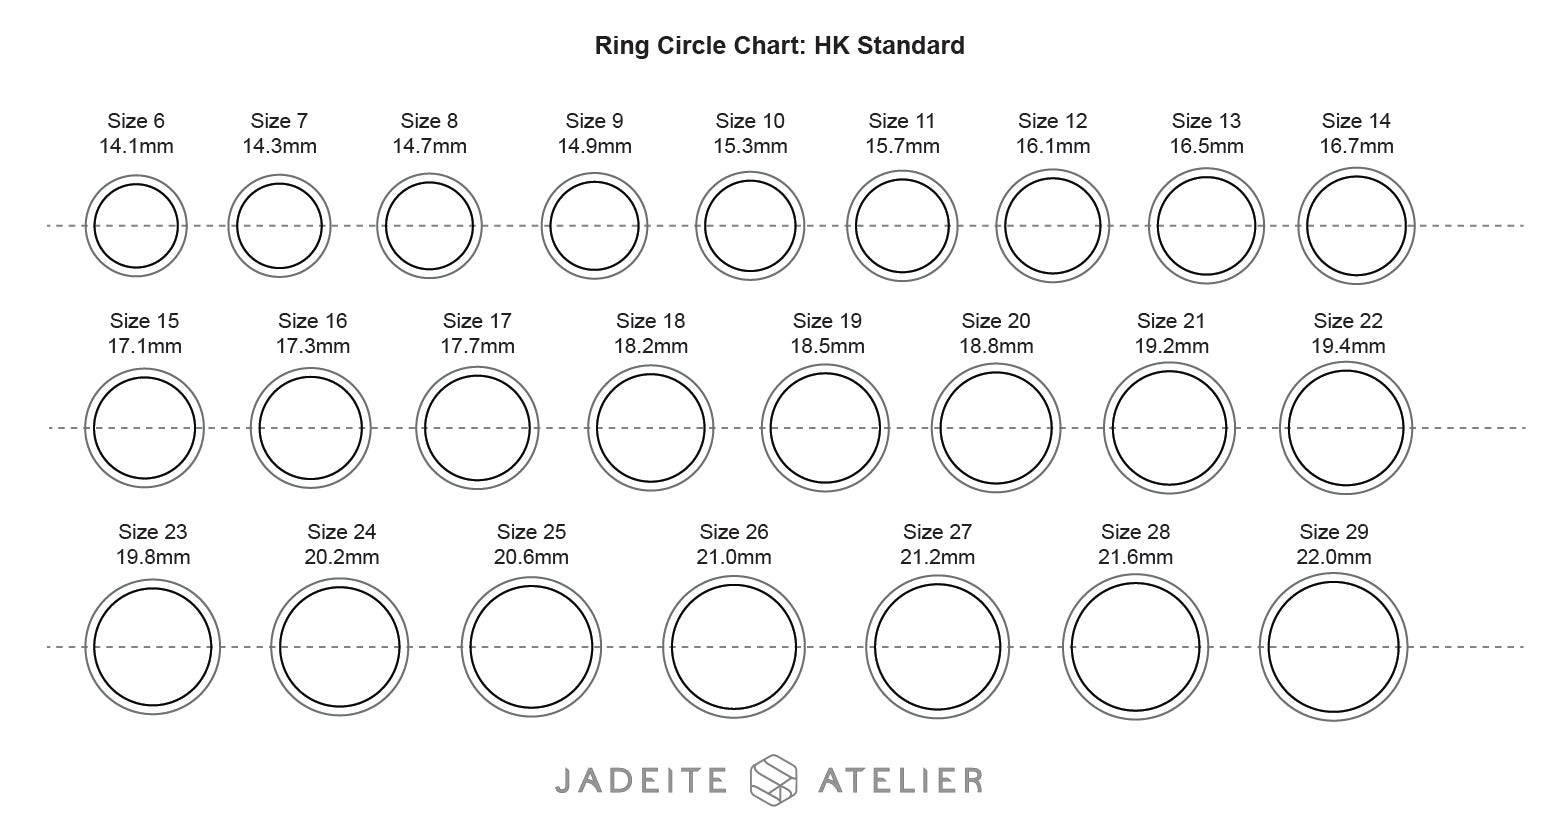 Jadeite Atelier ring circe chart: Hong Kong Standard. 